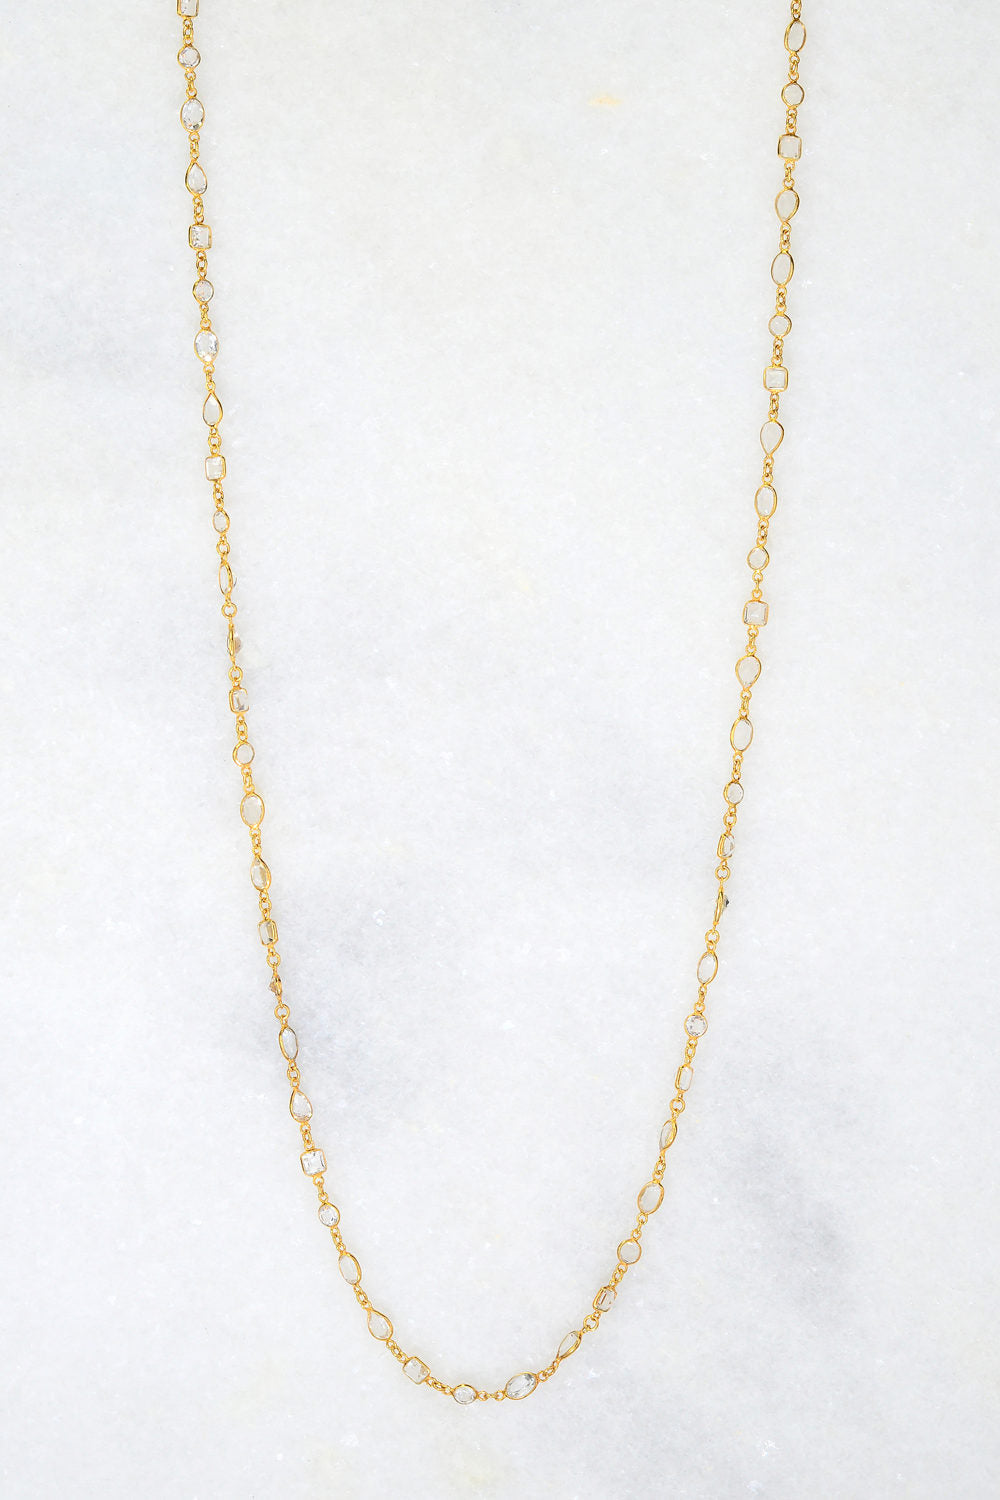 Crystal Quatz Necklace - April Birthstone Necklace - Gemstone Necklace - Layer Necklace - Long Layered Necklace - Layering Necklace